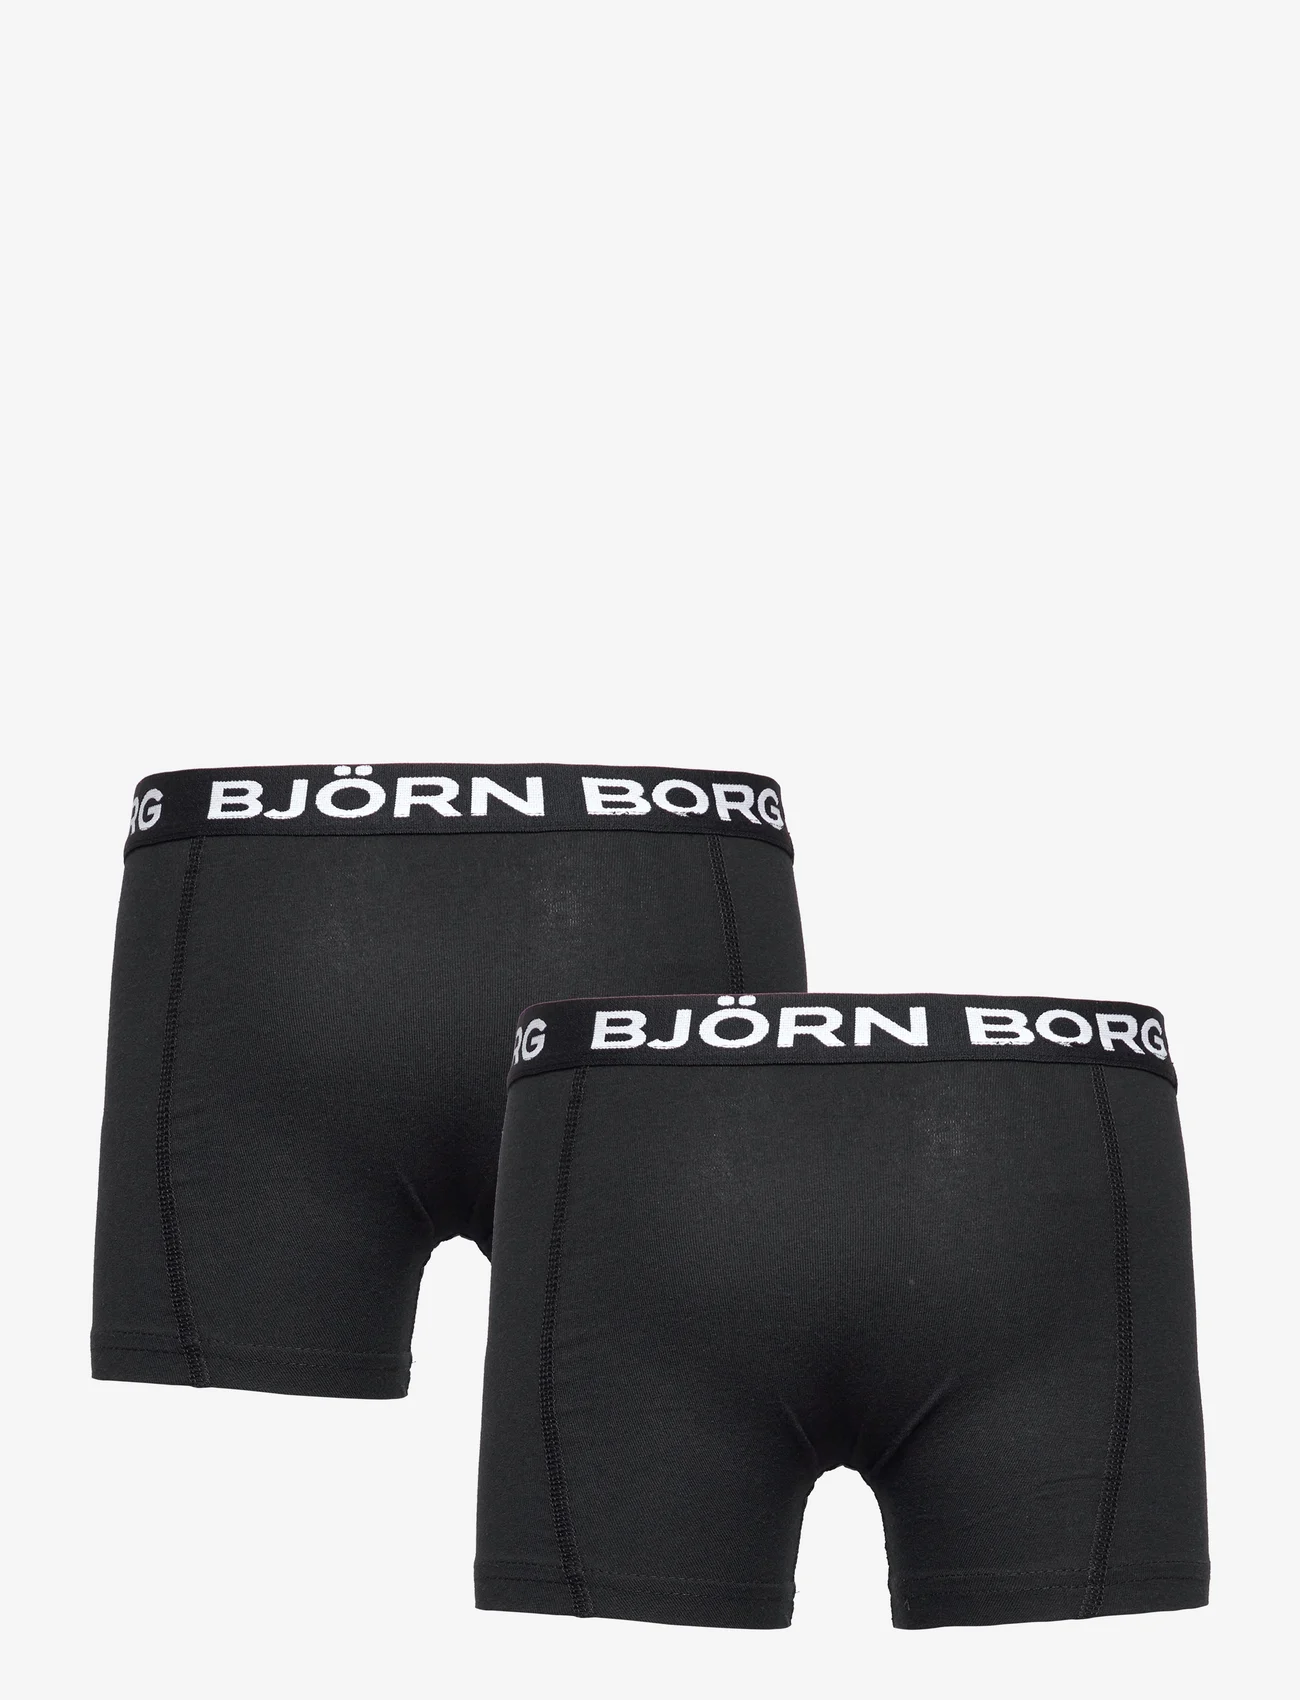 Björn Borg - CORE BOXER 2p - underpants - multipack 1 - 1